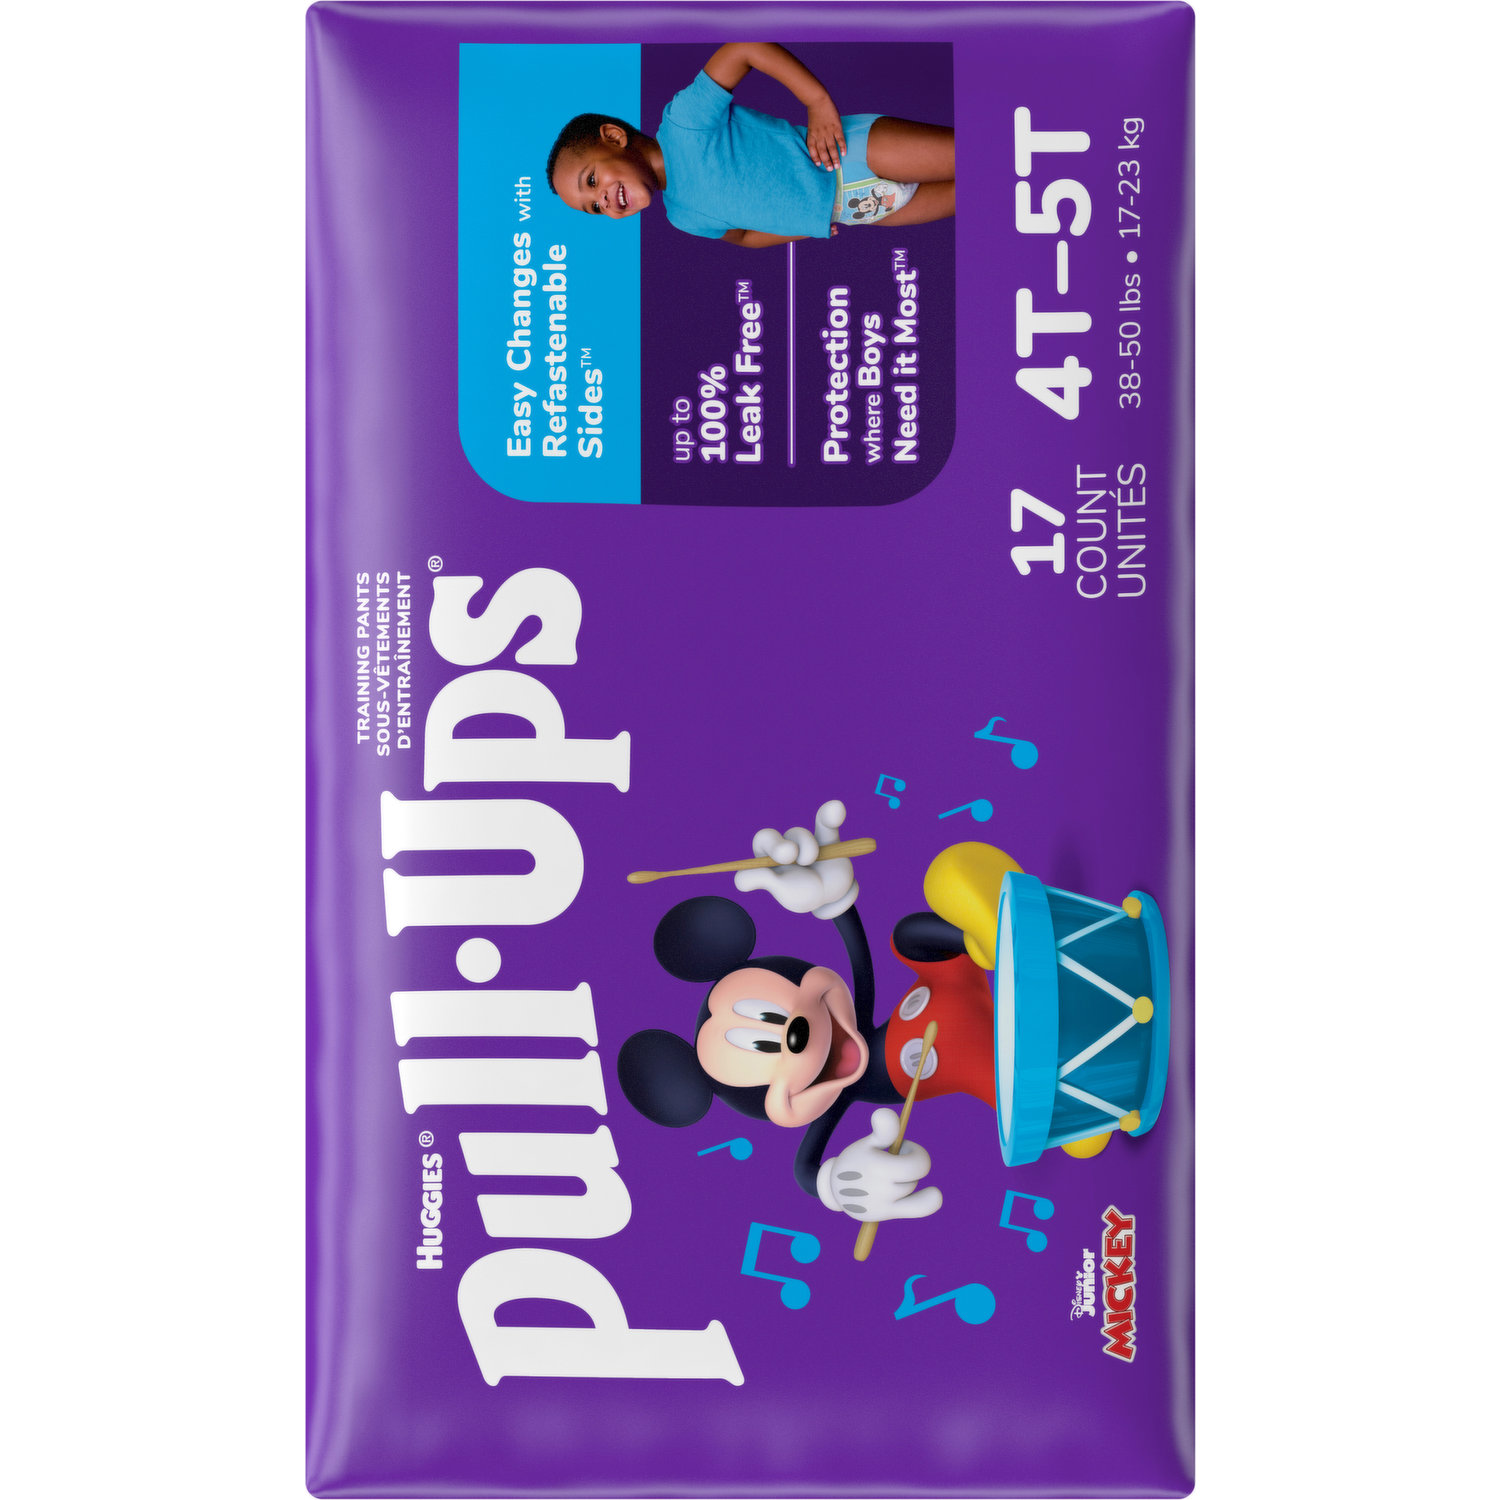 Pull-Ups Training Pants, Disney Junior Mickey, 4T-5T (38-50 lbs) - FRESH by  Brookshire's